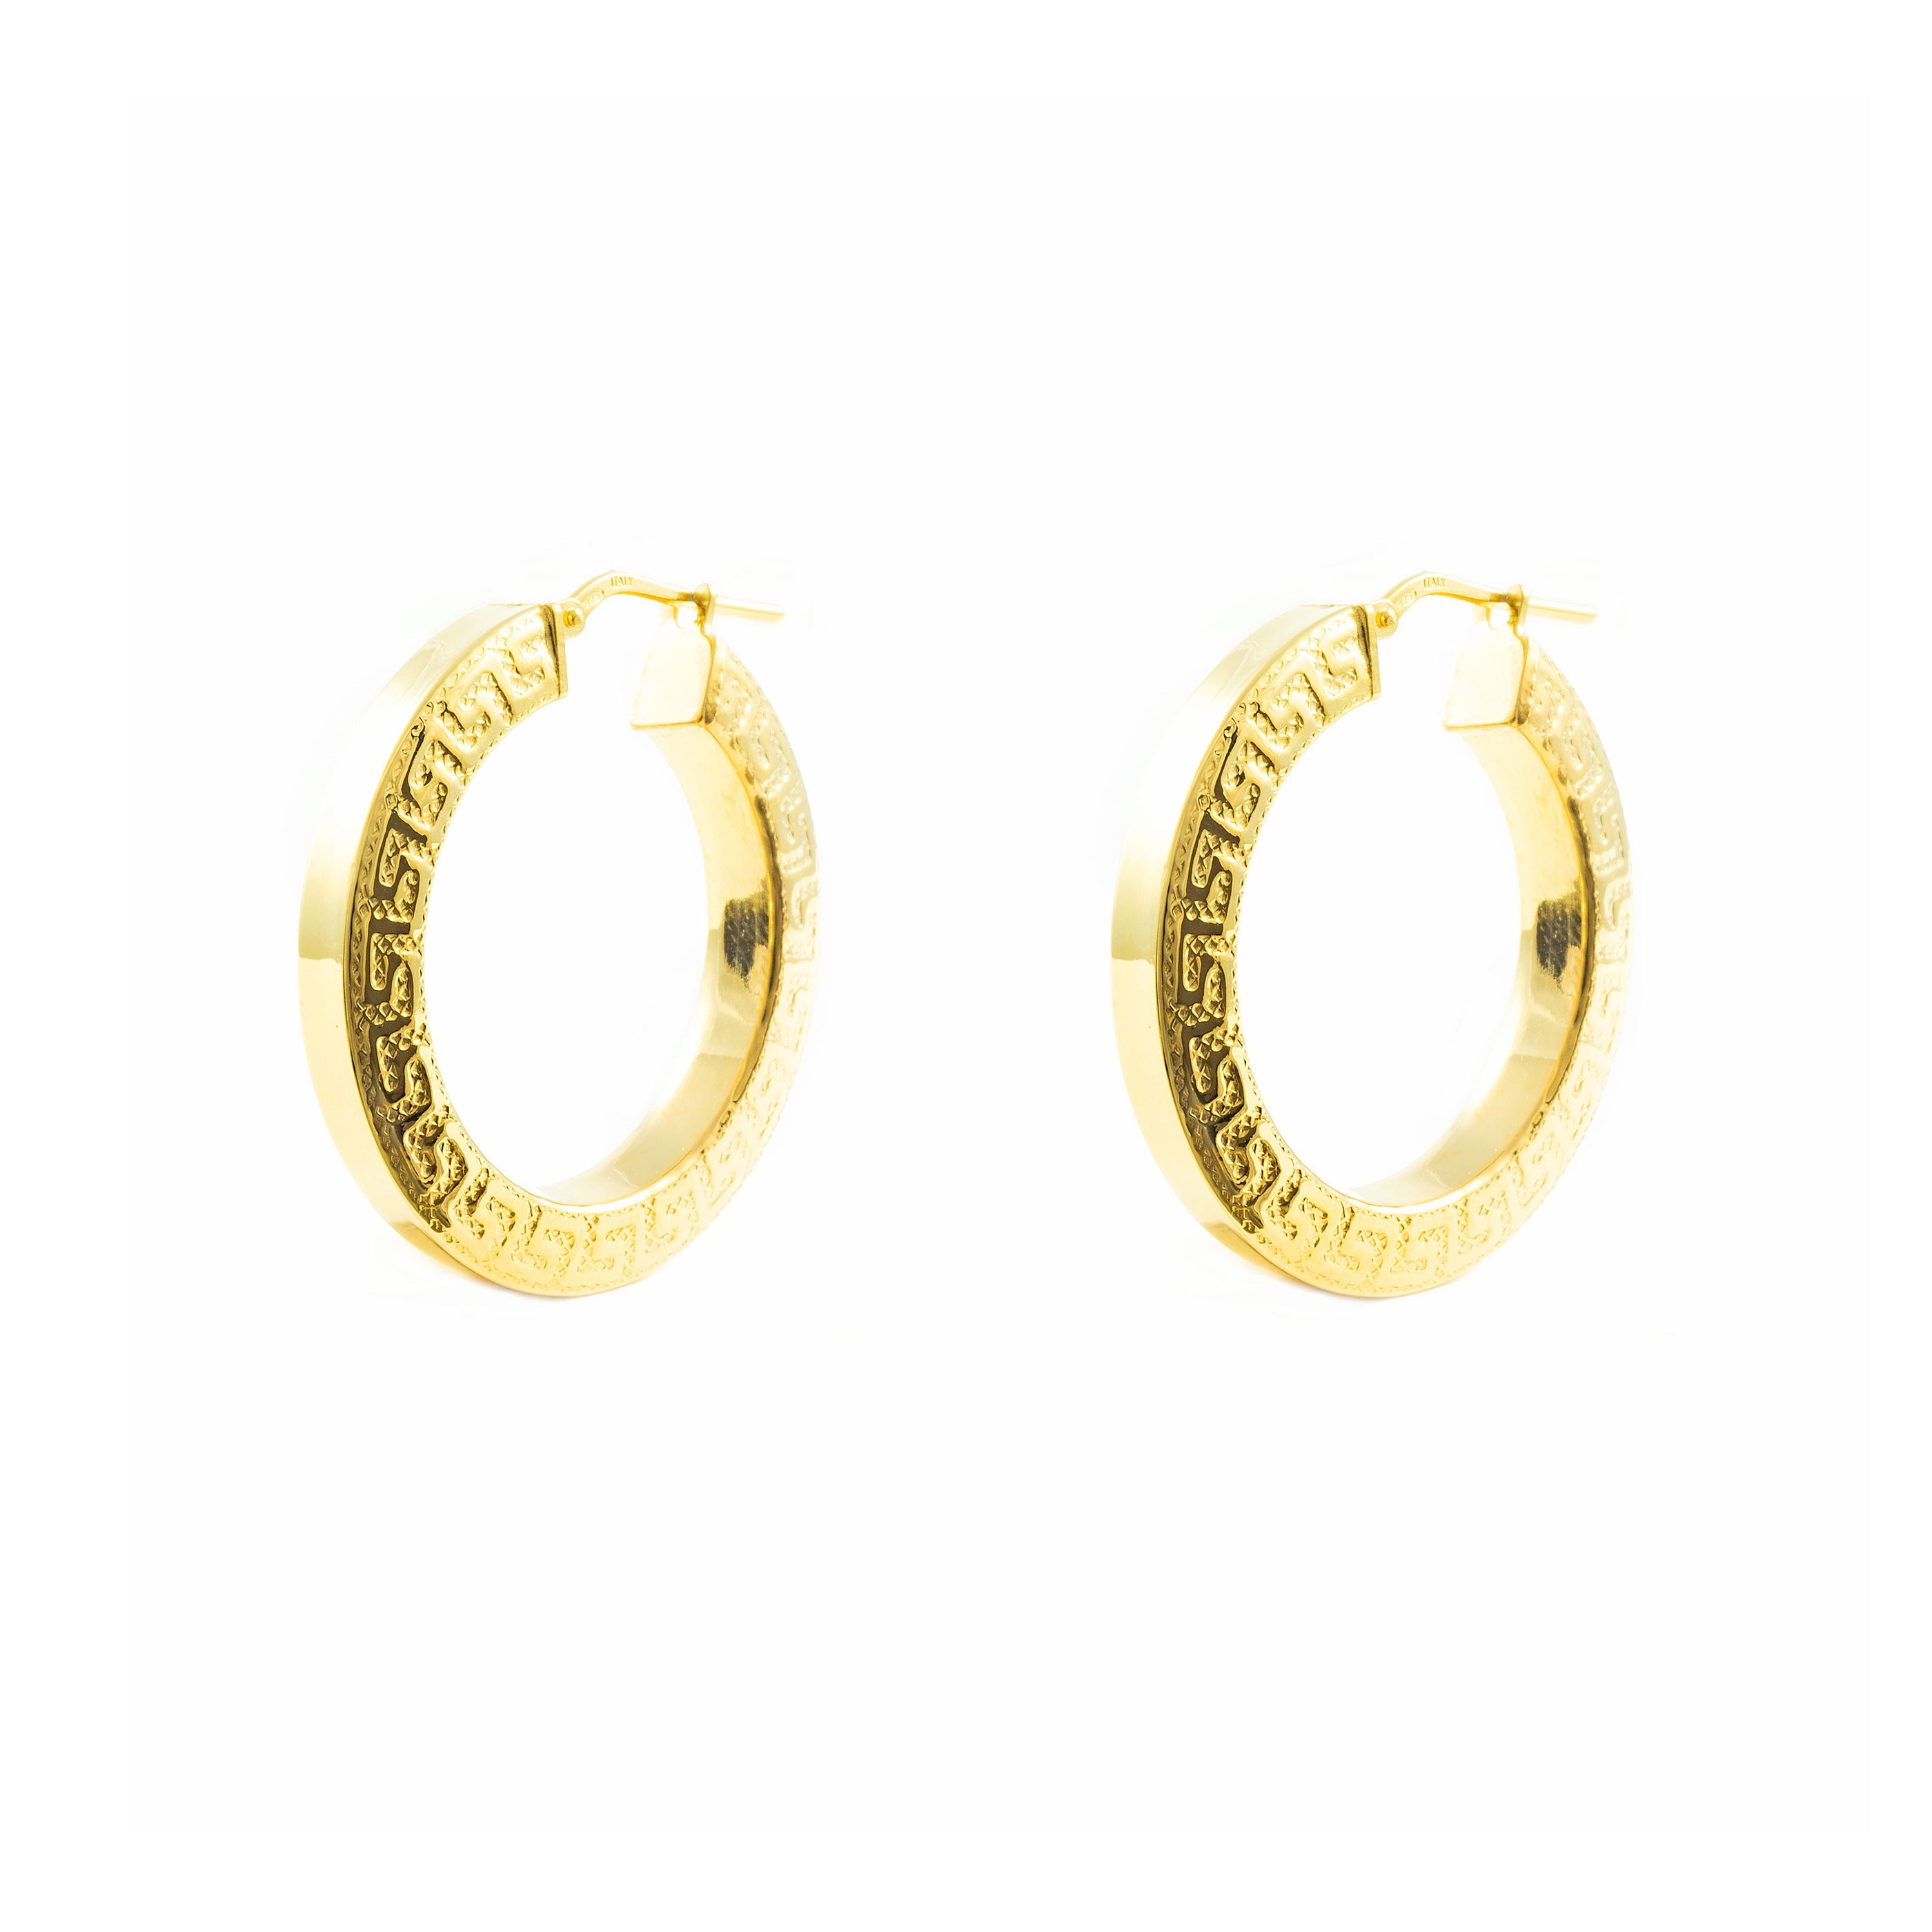 Golden Sterling Silver Earrings Shiny Greca Square Hoops 29 x 4 mm